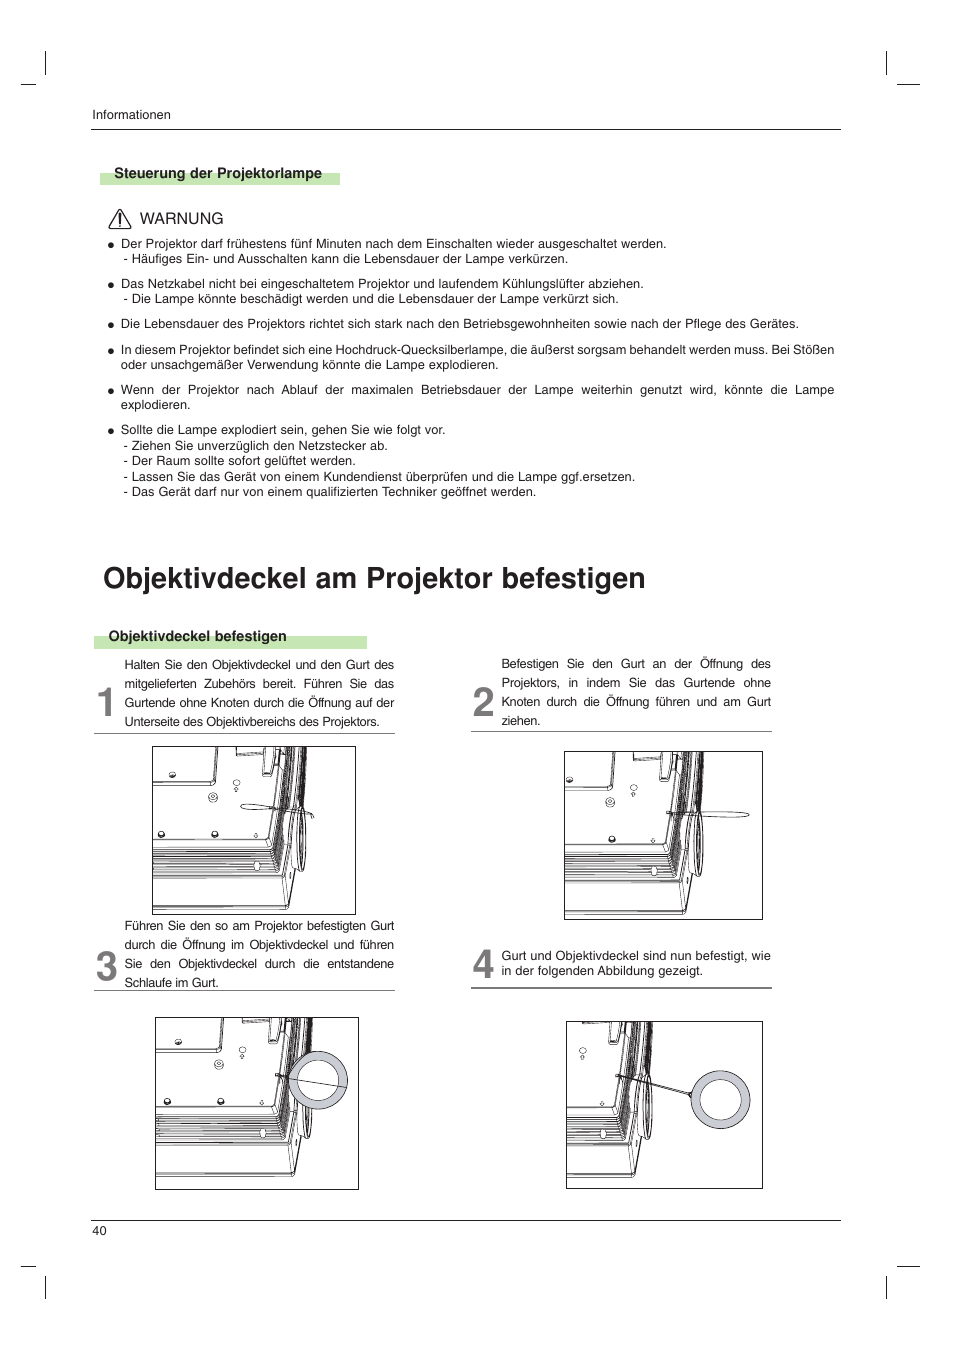 Objektivdeckel am projektor befestigen | LG BX501B Benutzerhandbuch | Seite 40 / 42